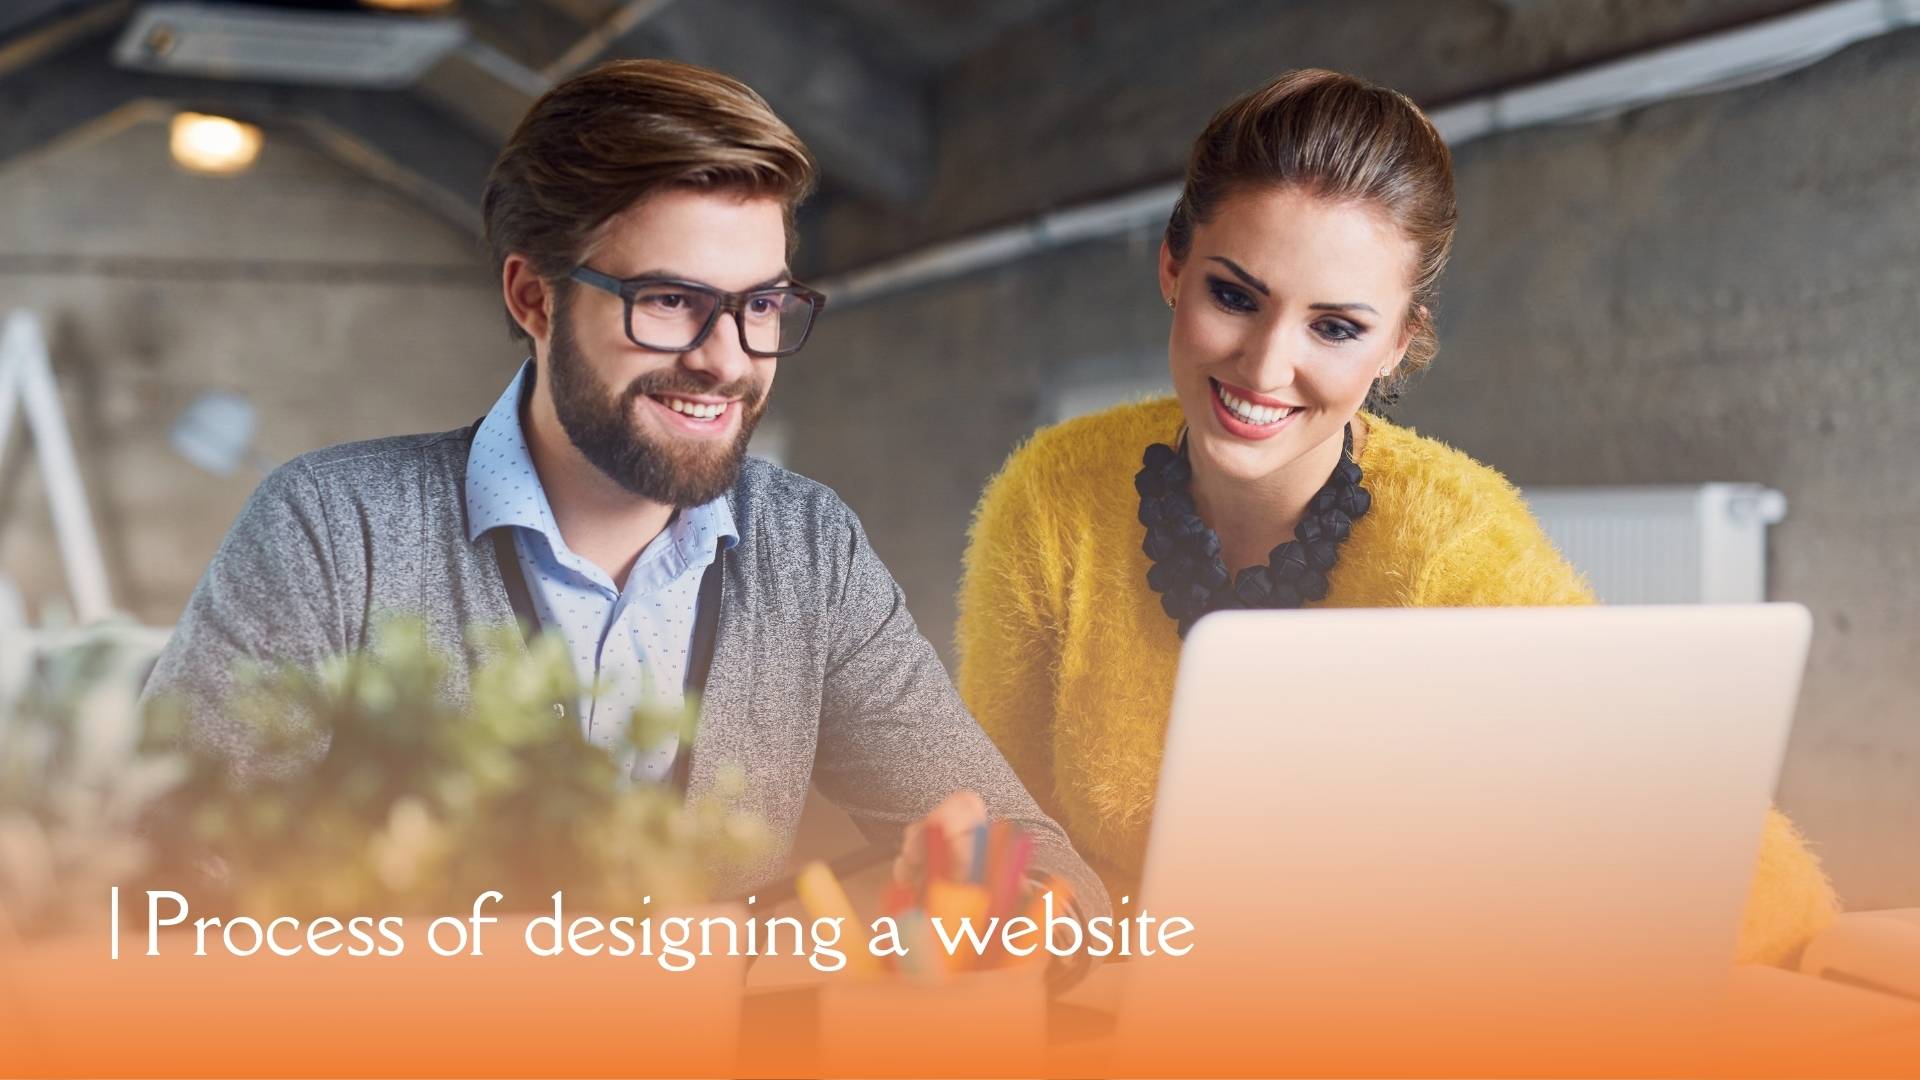 People designing a website